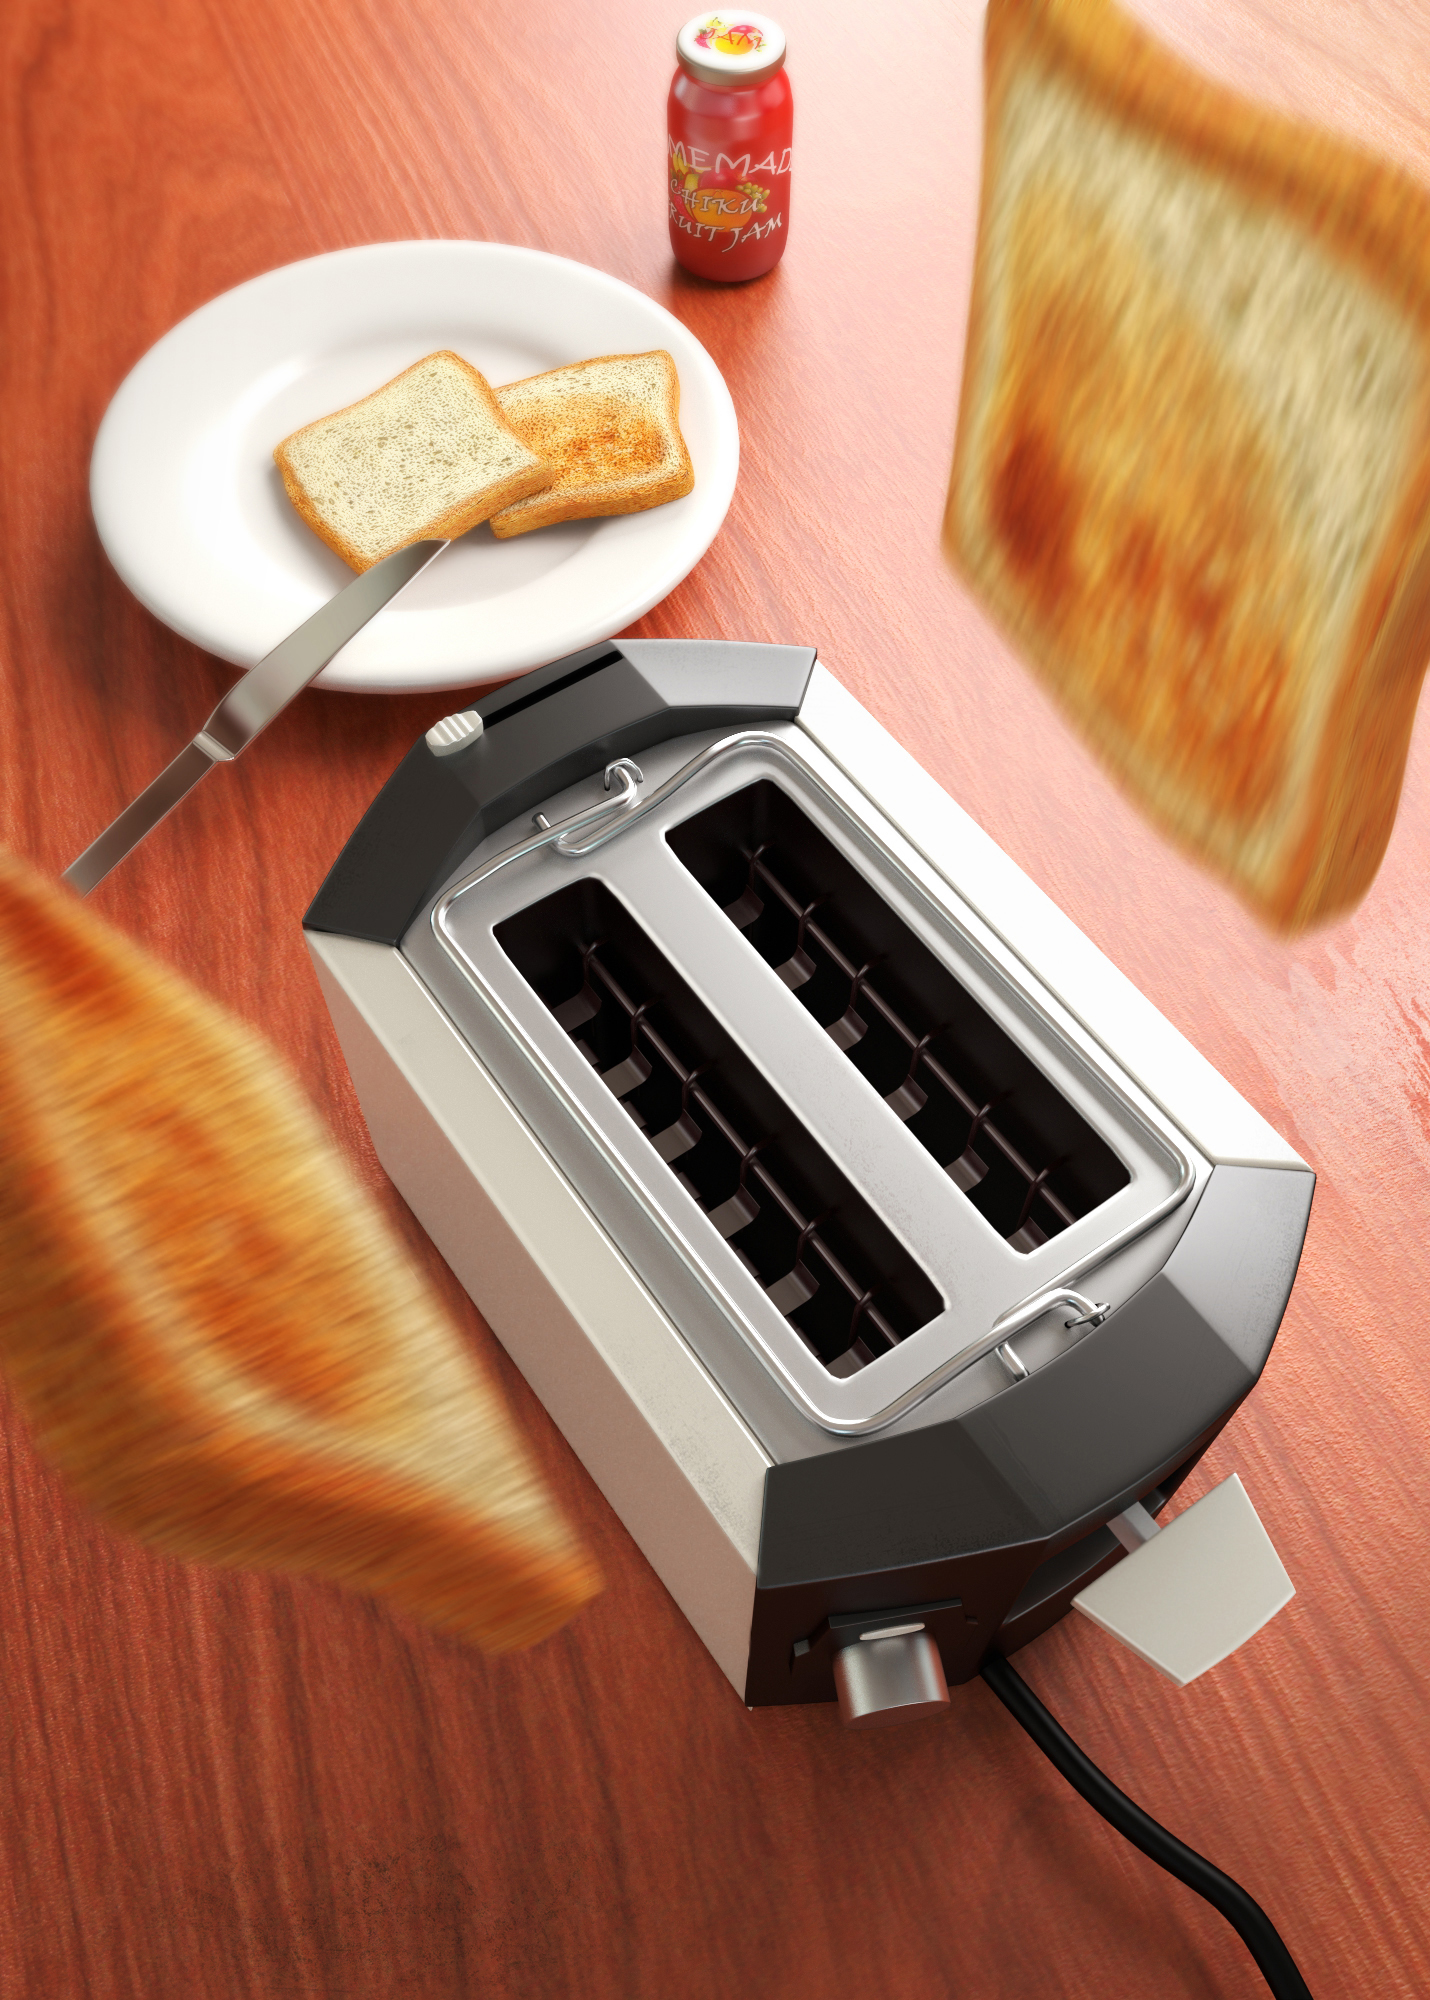 http://fc00.deviantart.net/fs71/f/2012/199/5/9/toaster_3d_by_axel_redfield-d57eqjm.jpg